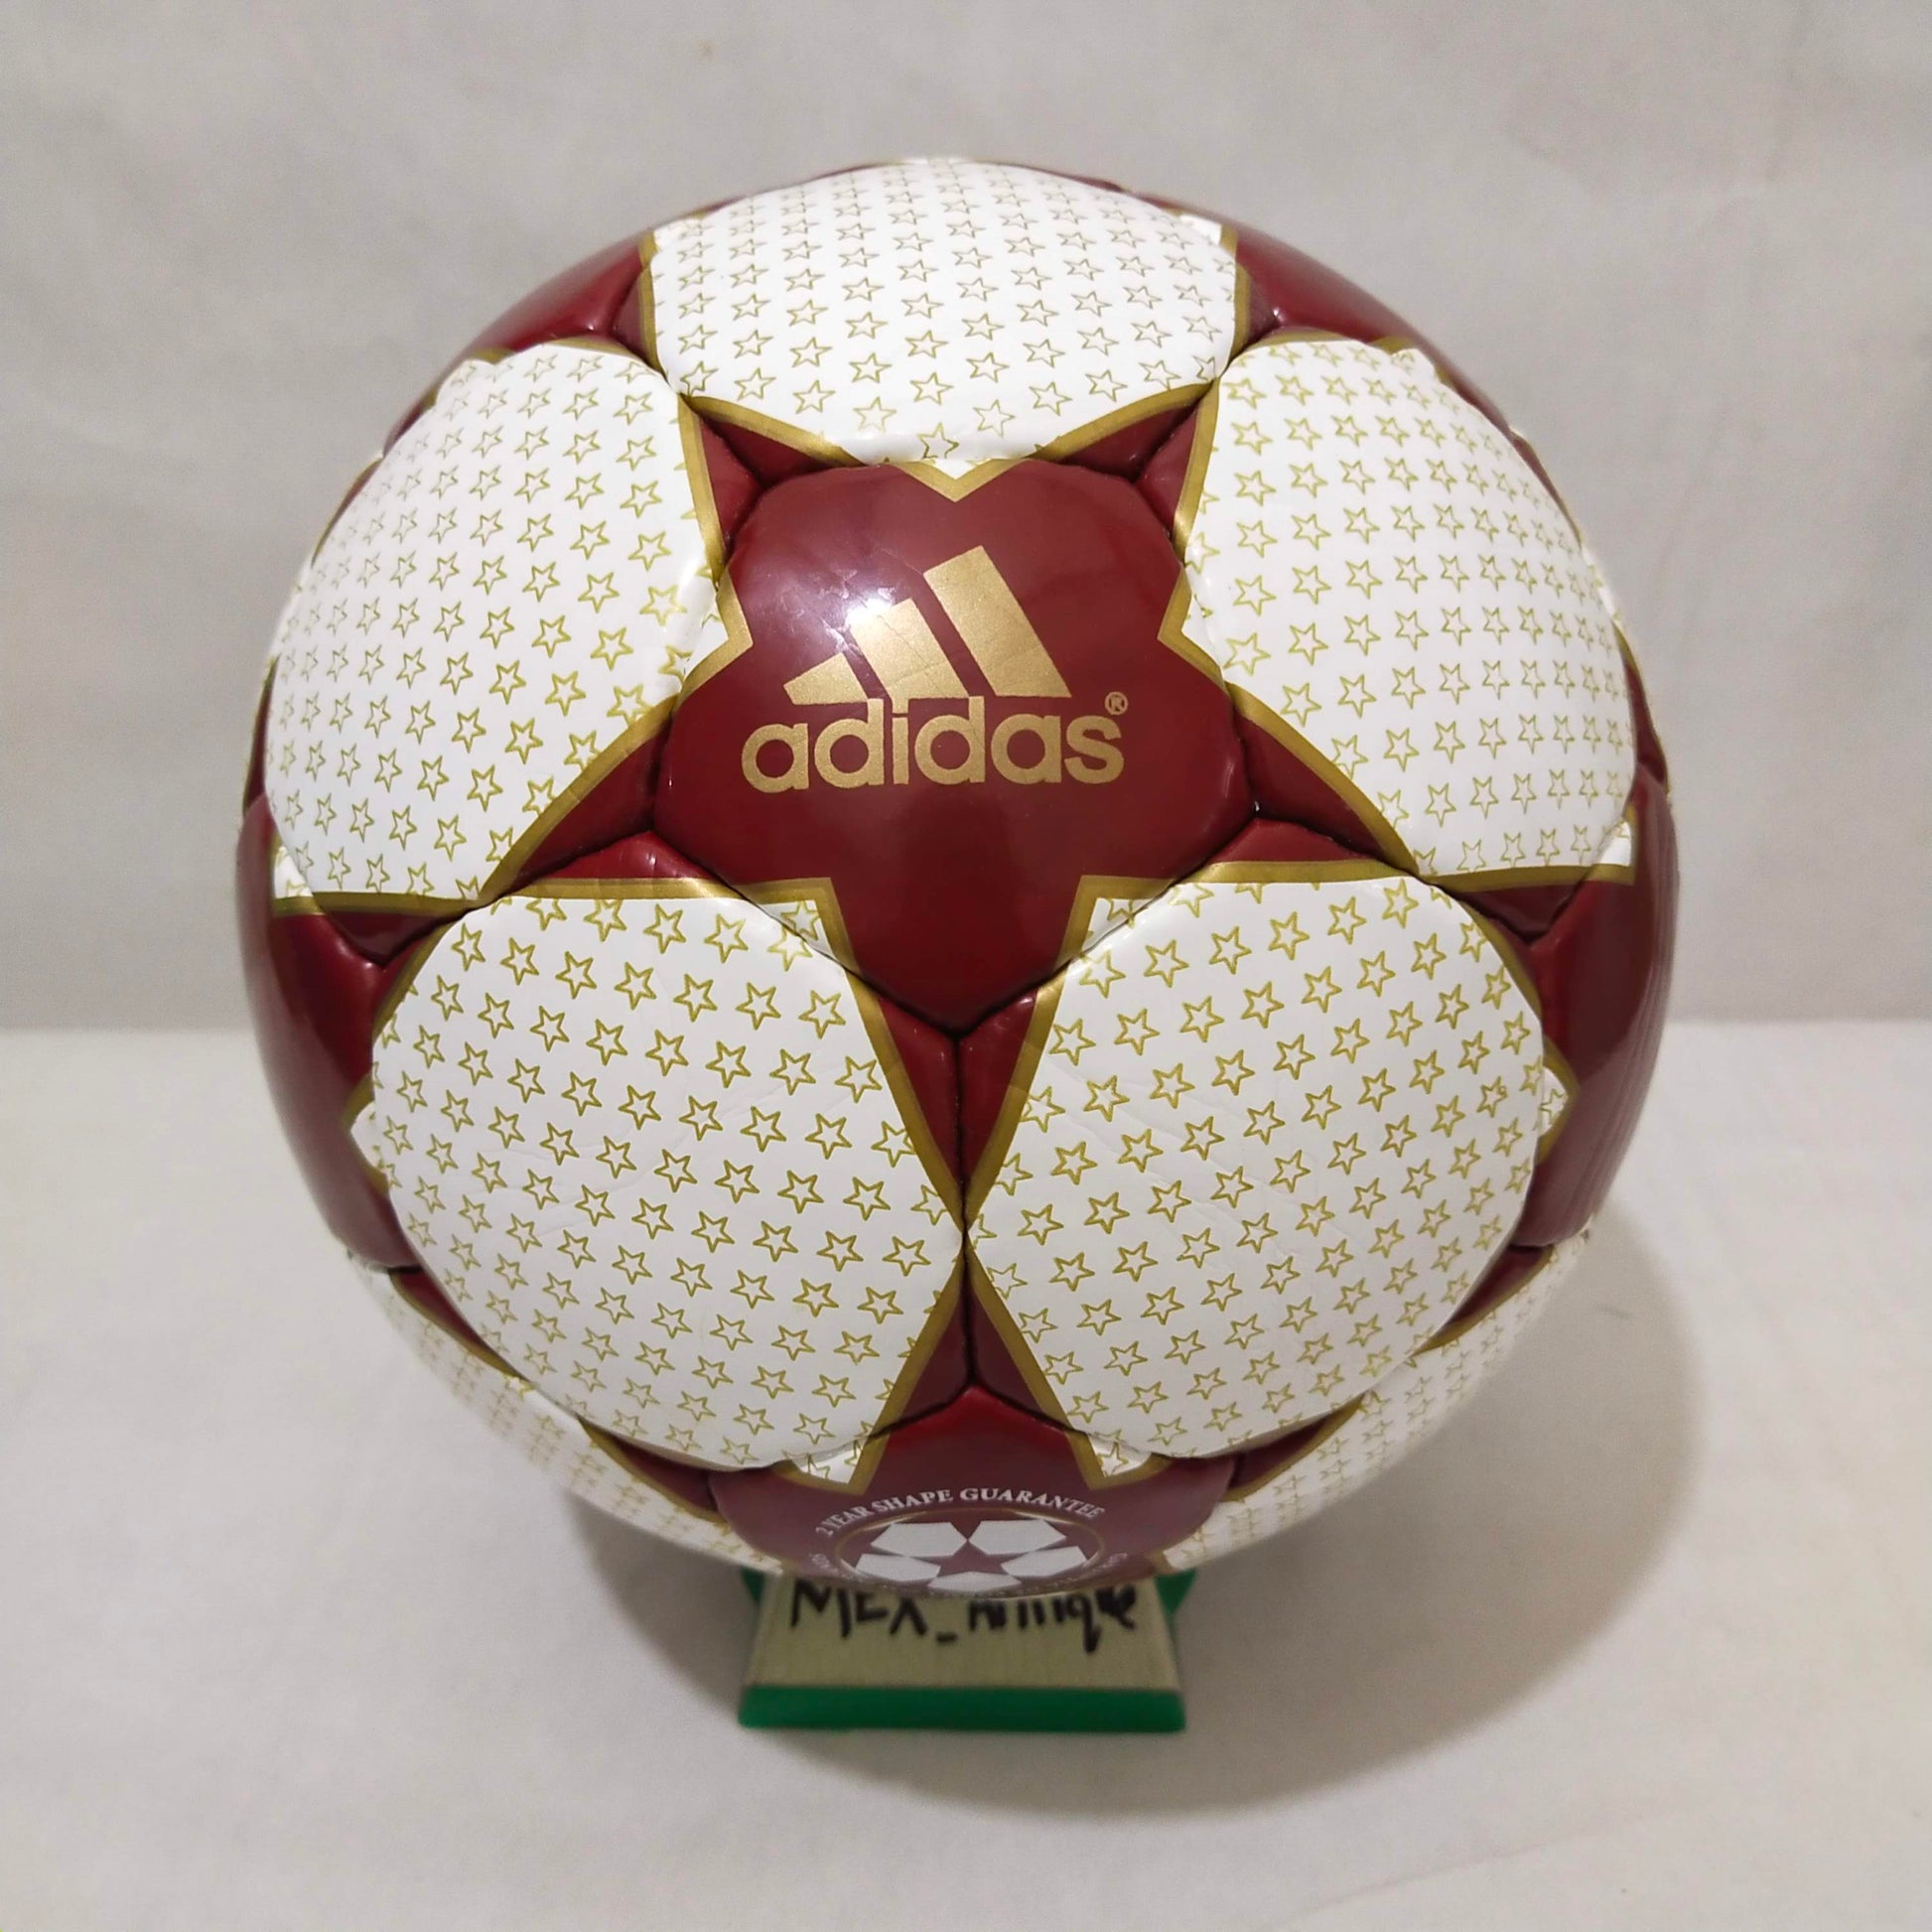 Adidas Finale 4 | 2004-2005 | UEFA Champions League Ball | Size 5 06